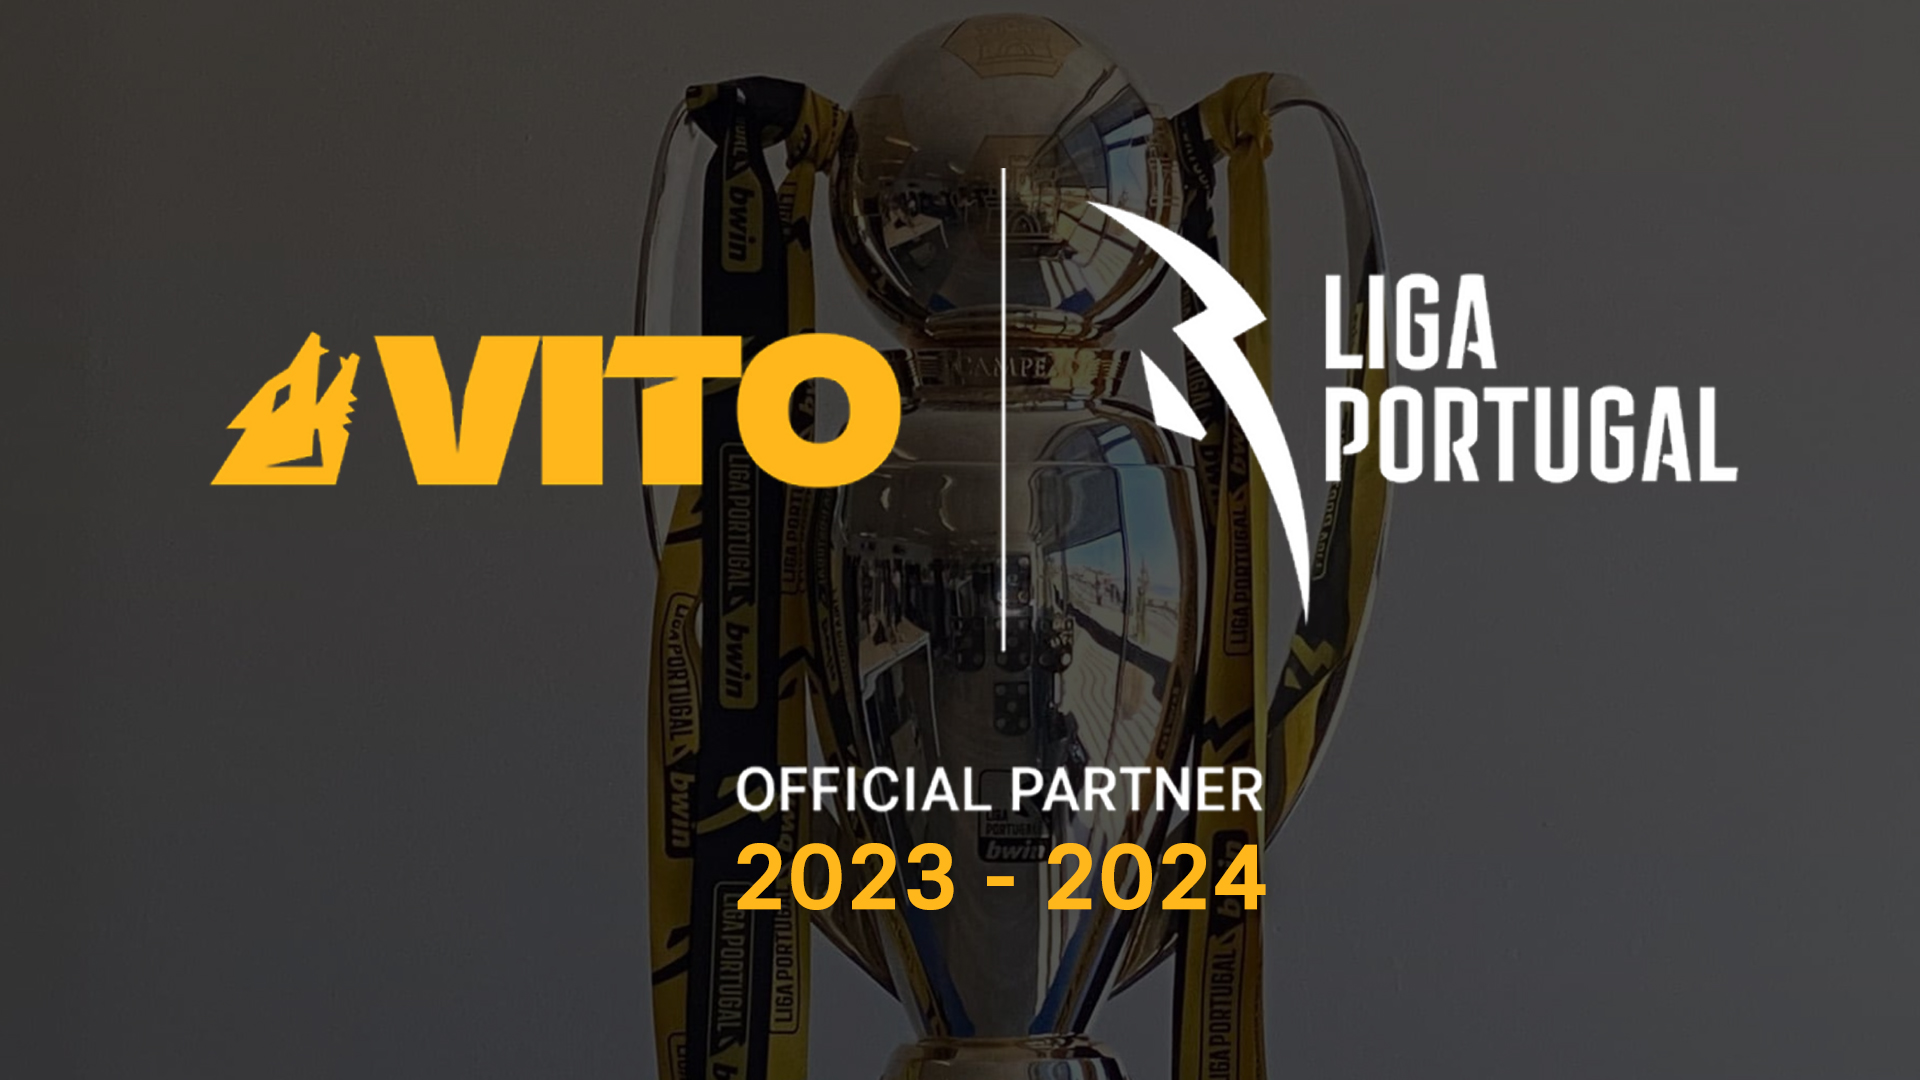 Successful partnership - Renewal of the Liga Portugal sponsorship for the third consecutive season.